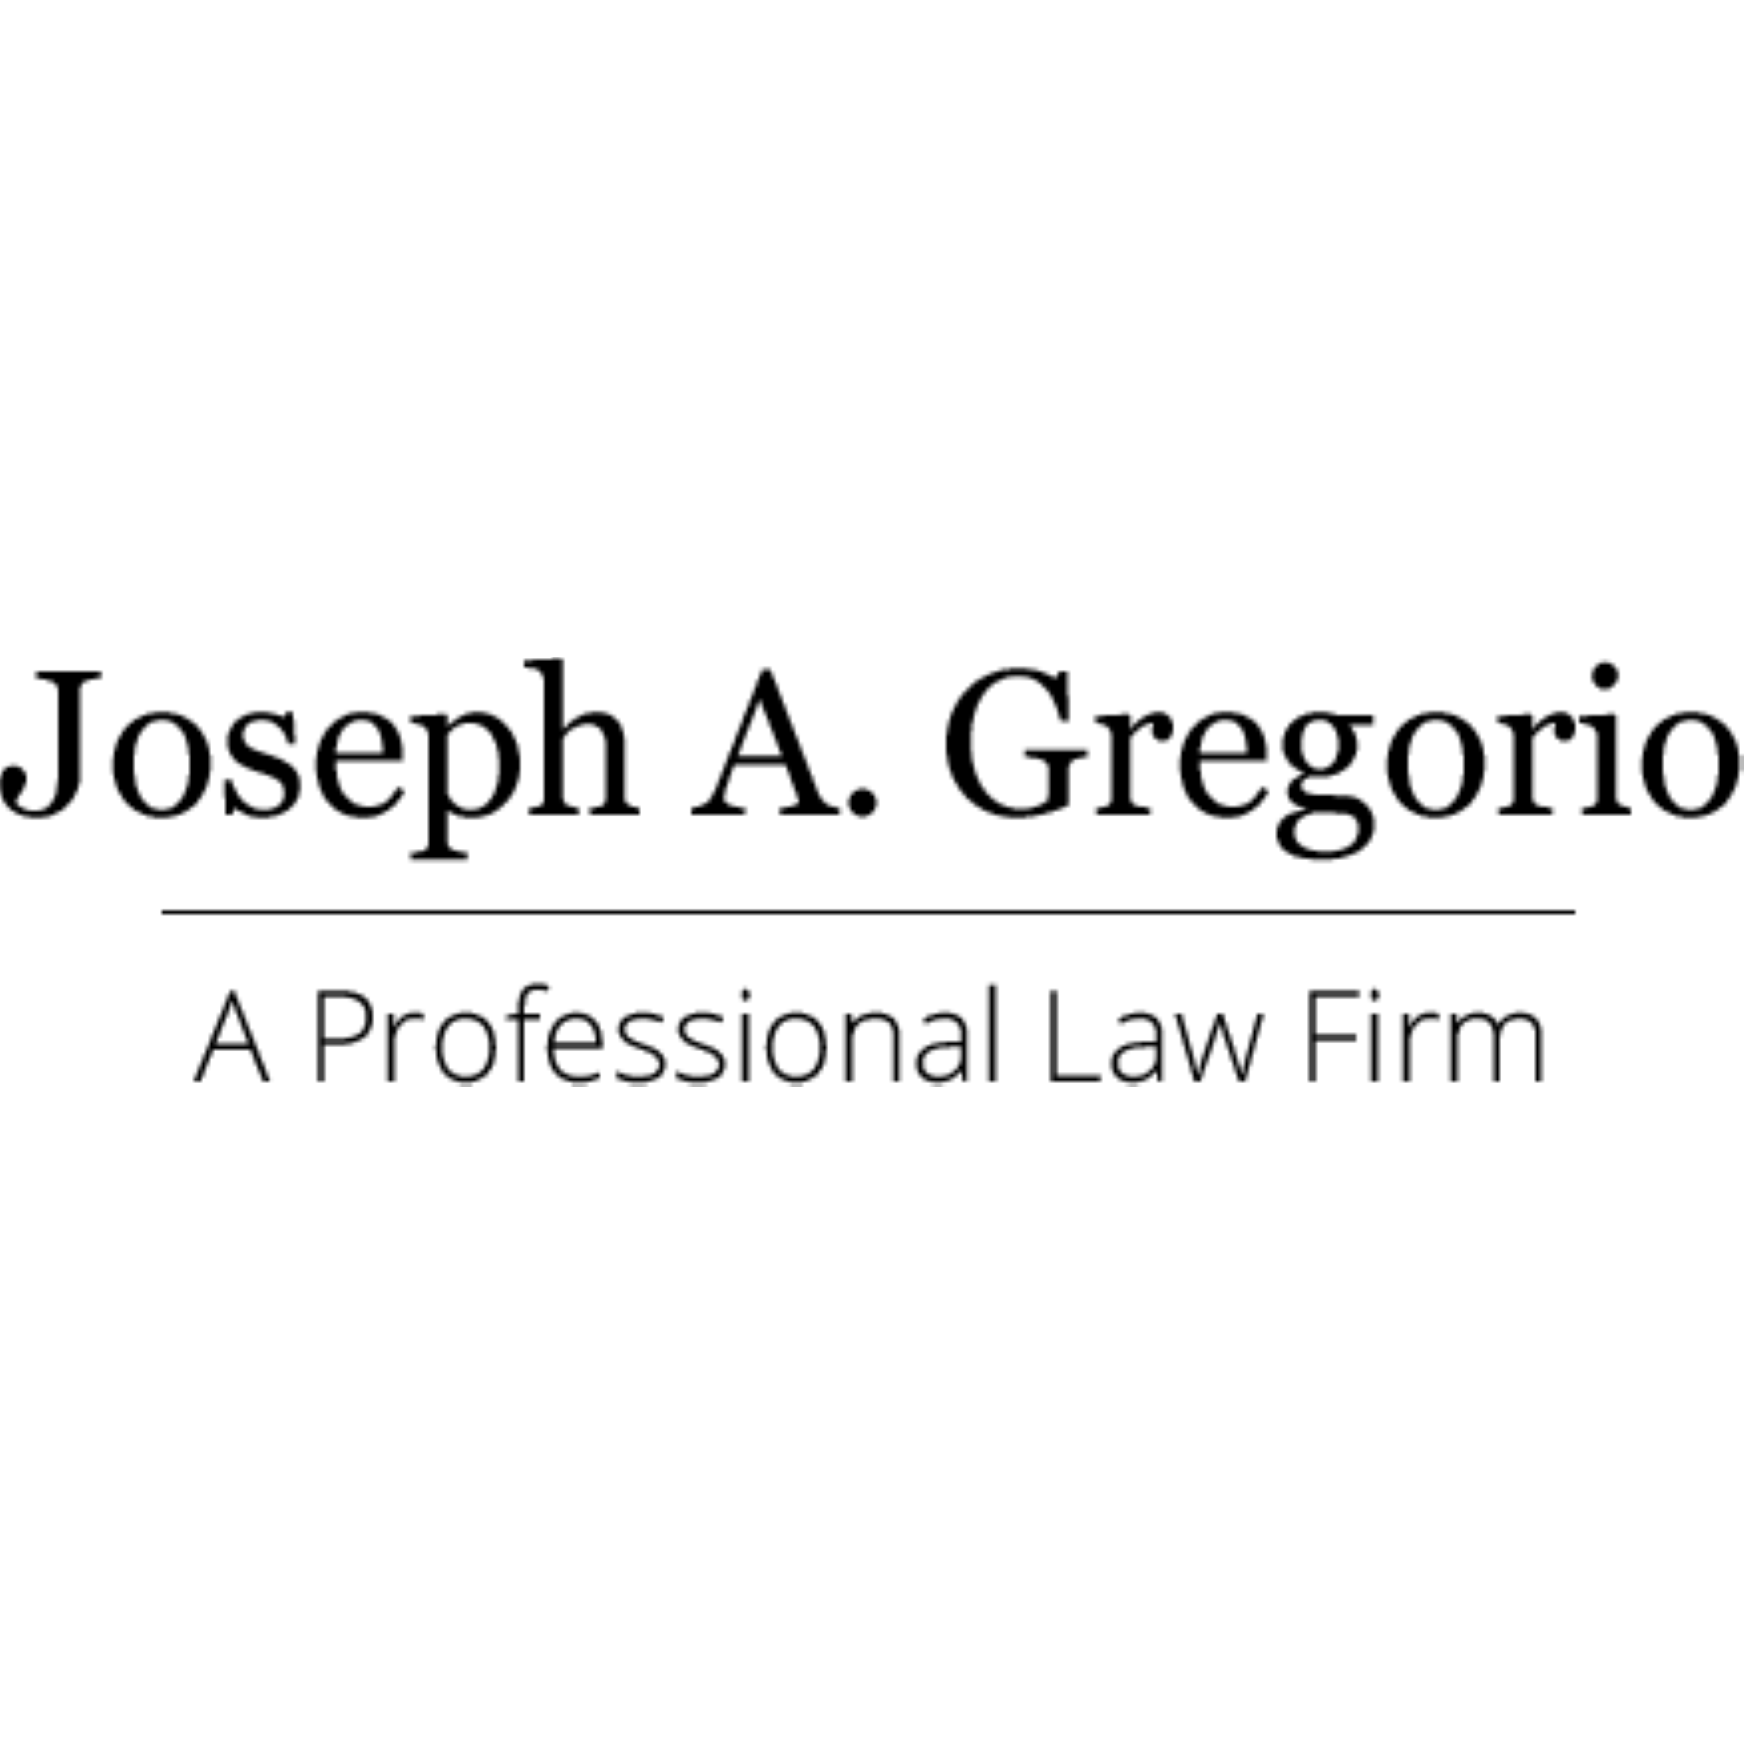 Joseph A. Gregorio, A Professional Law Firm